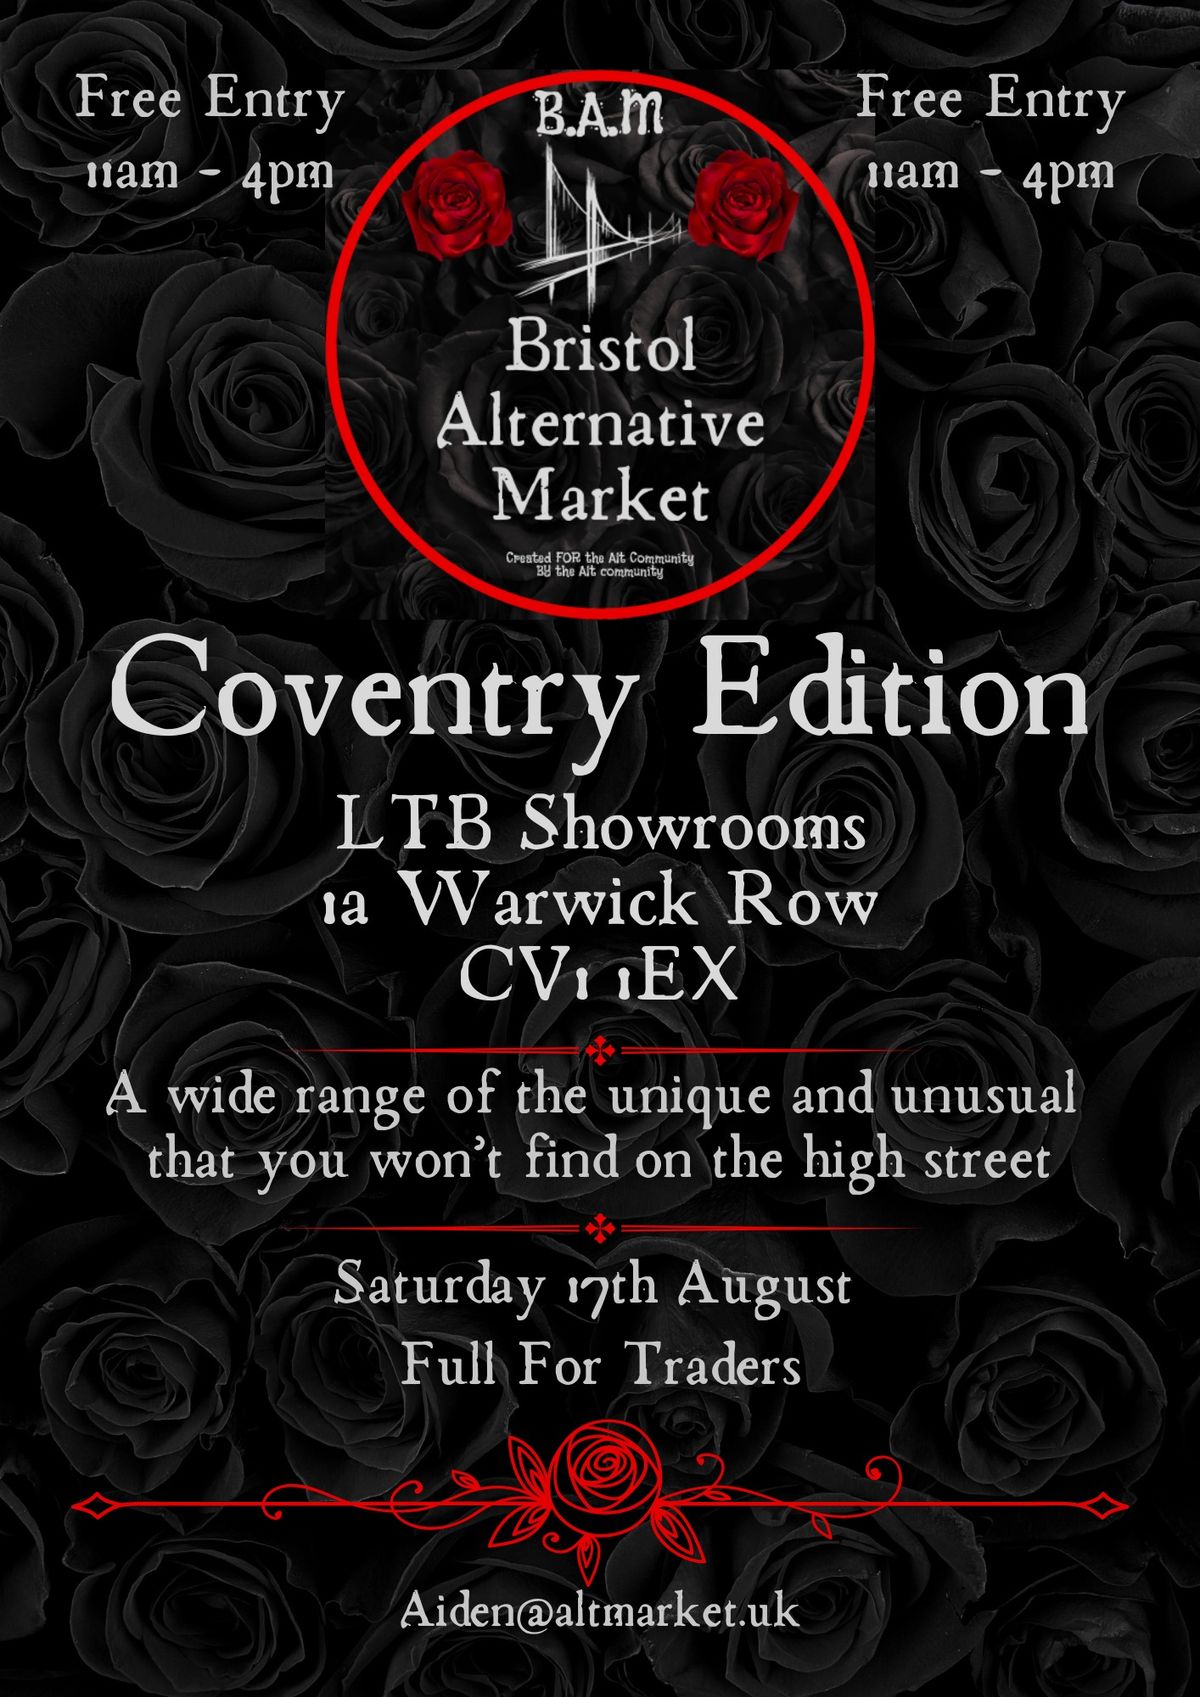 Coventry Edition-Bristol Alternative Market